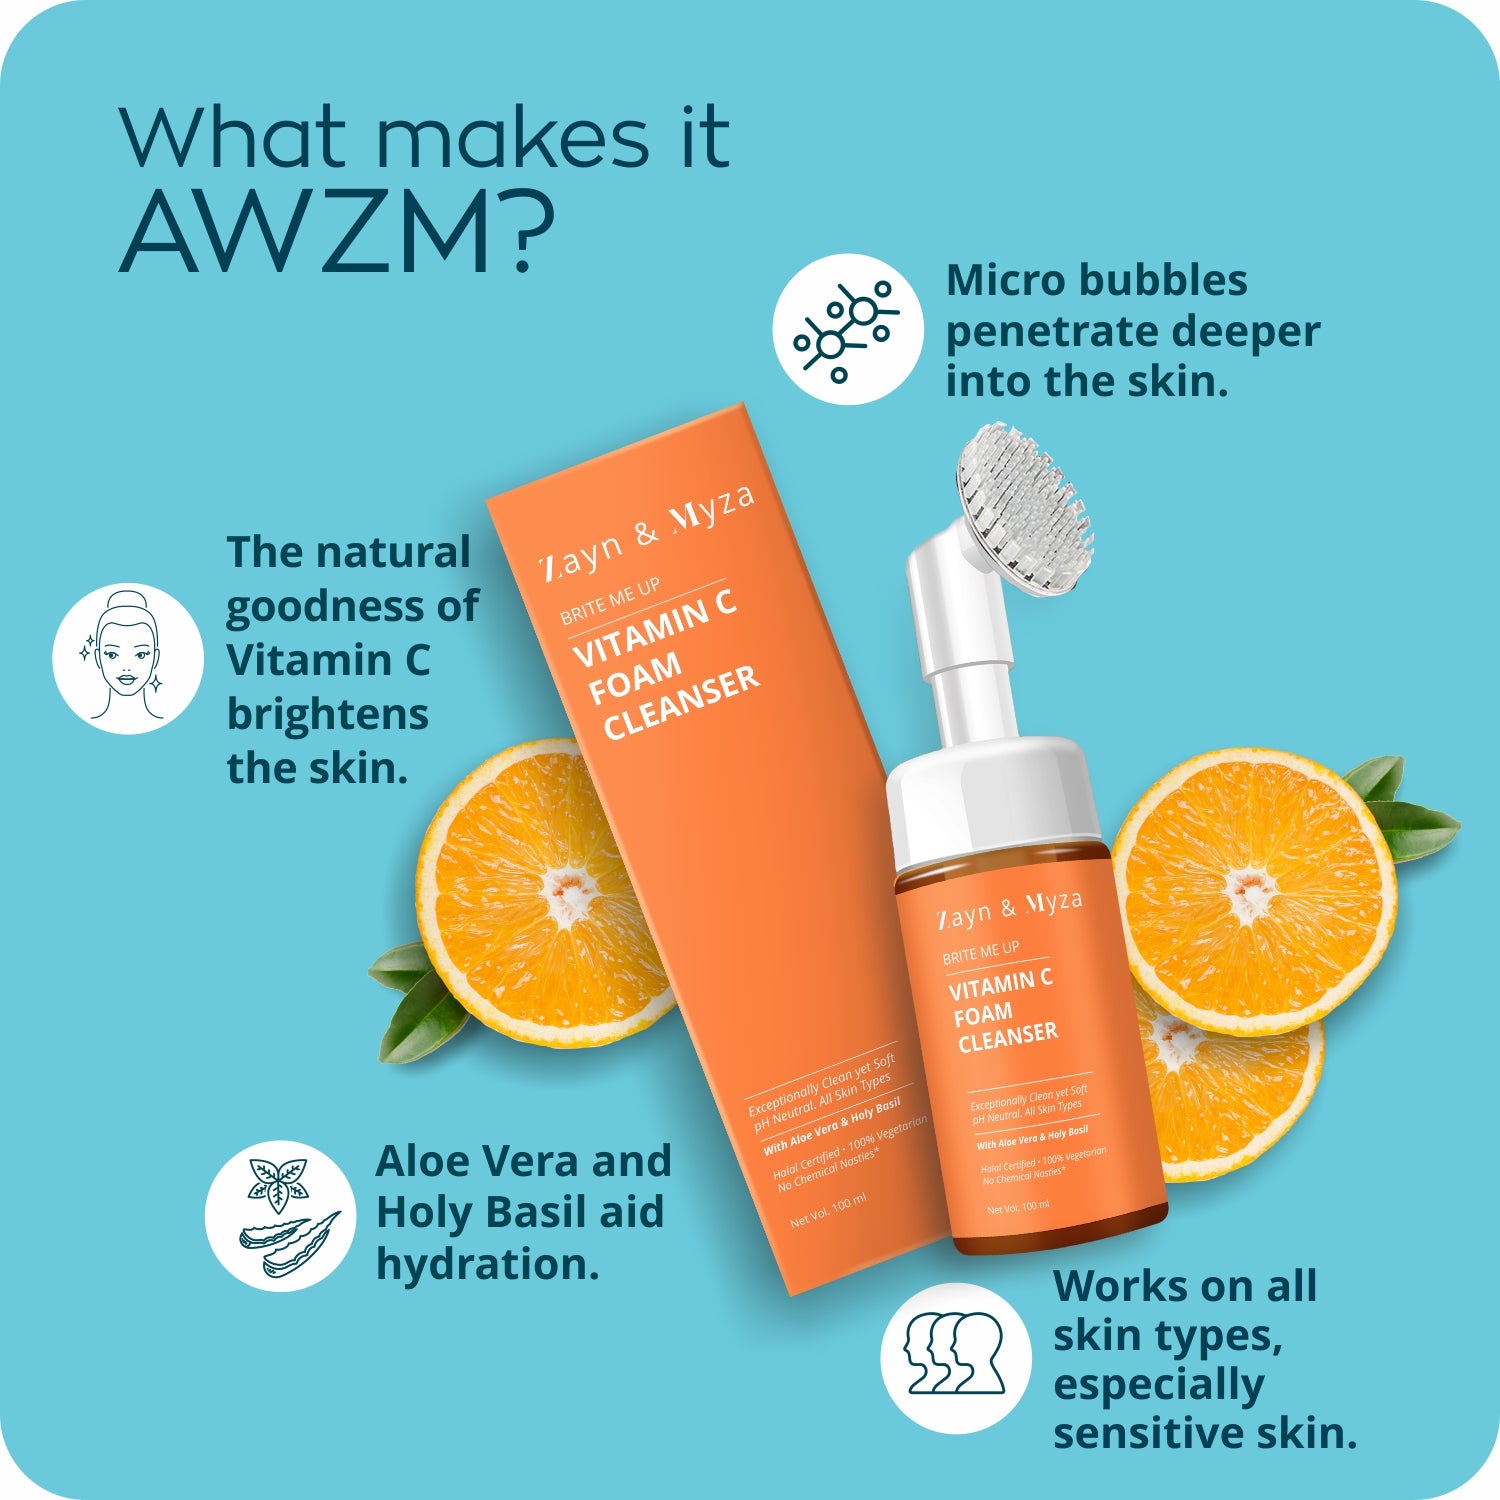 Zayn &amp; Myza Foaming Face Wash (100ml) - Vitamin C (India)